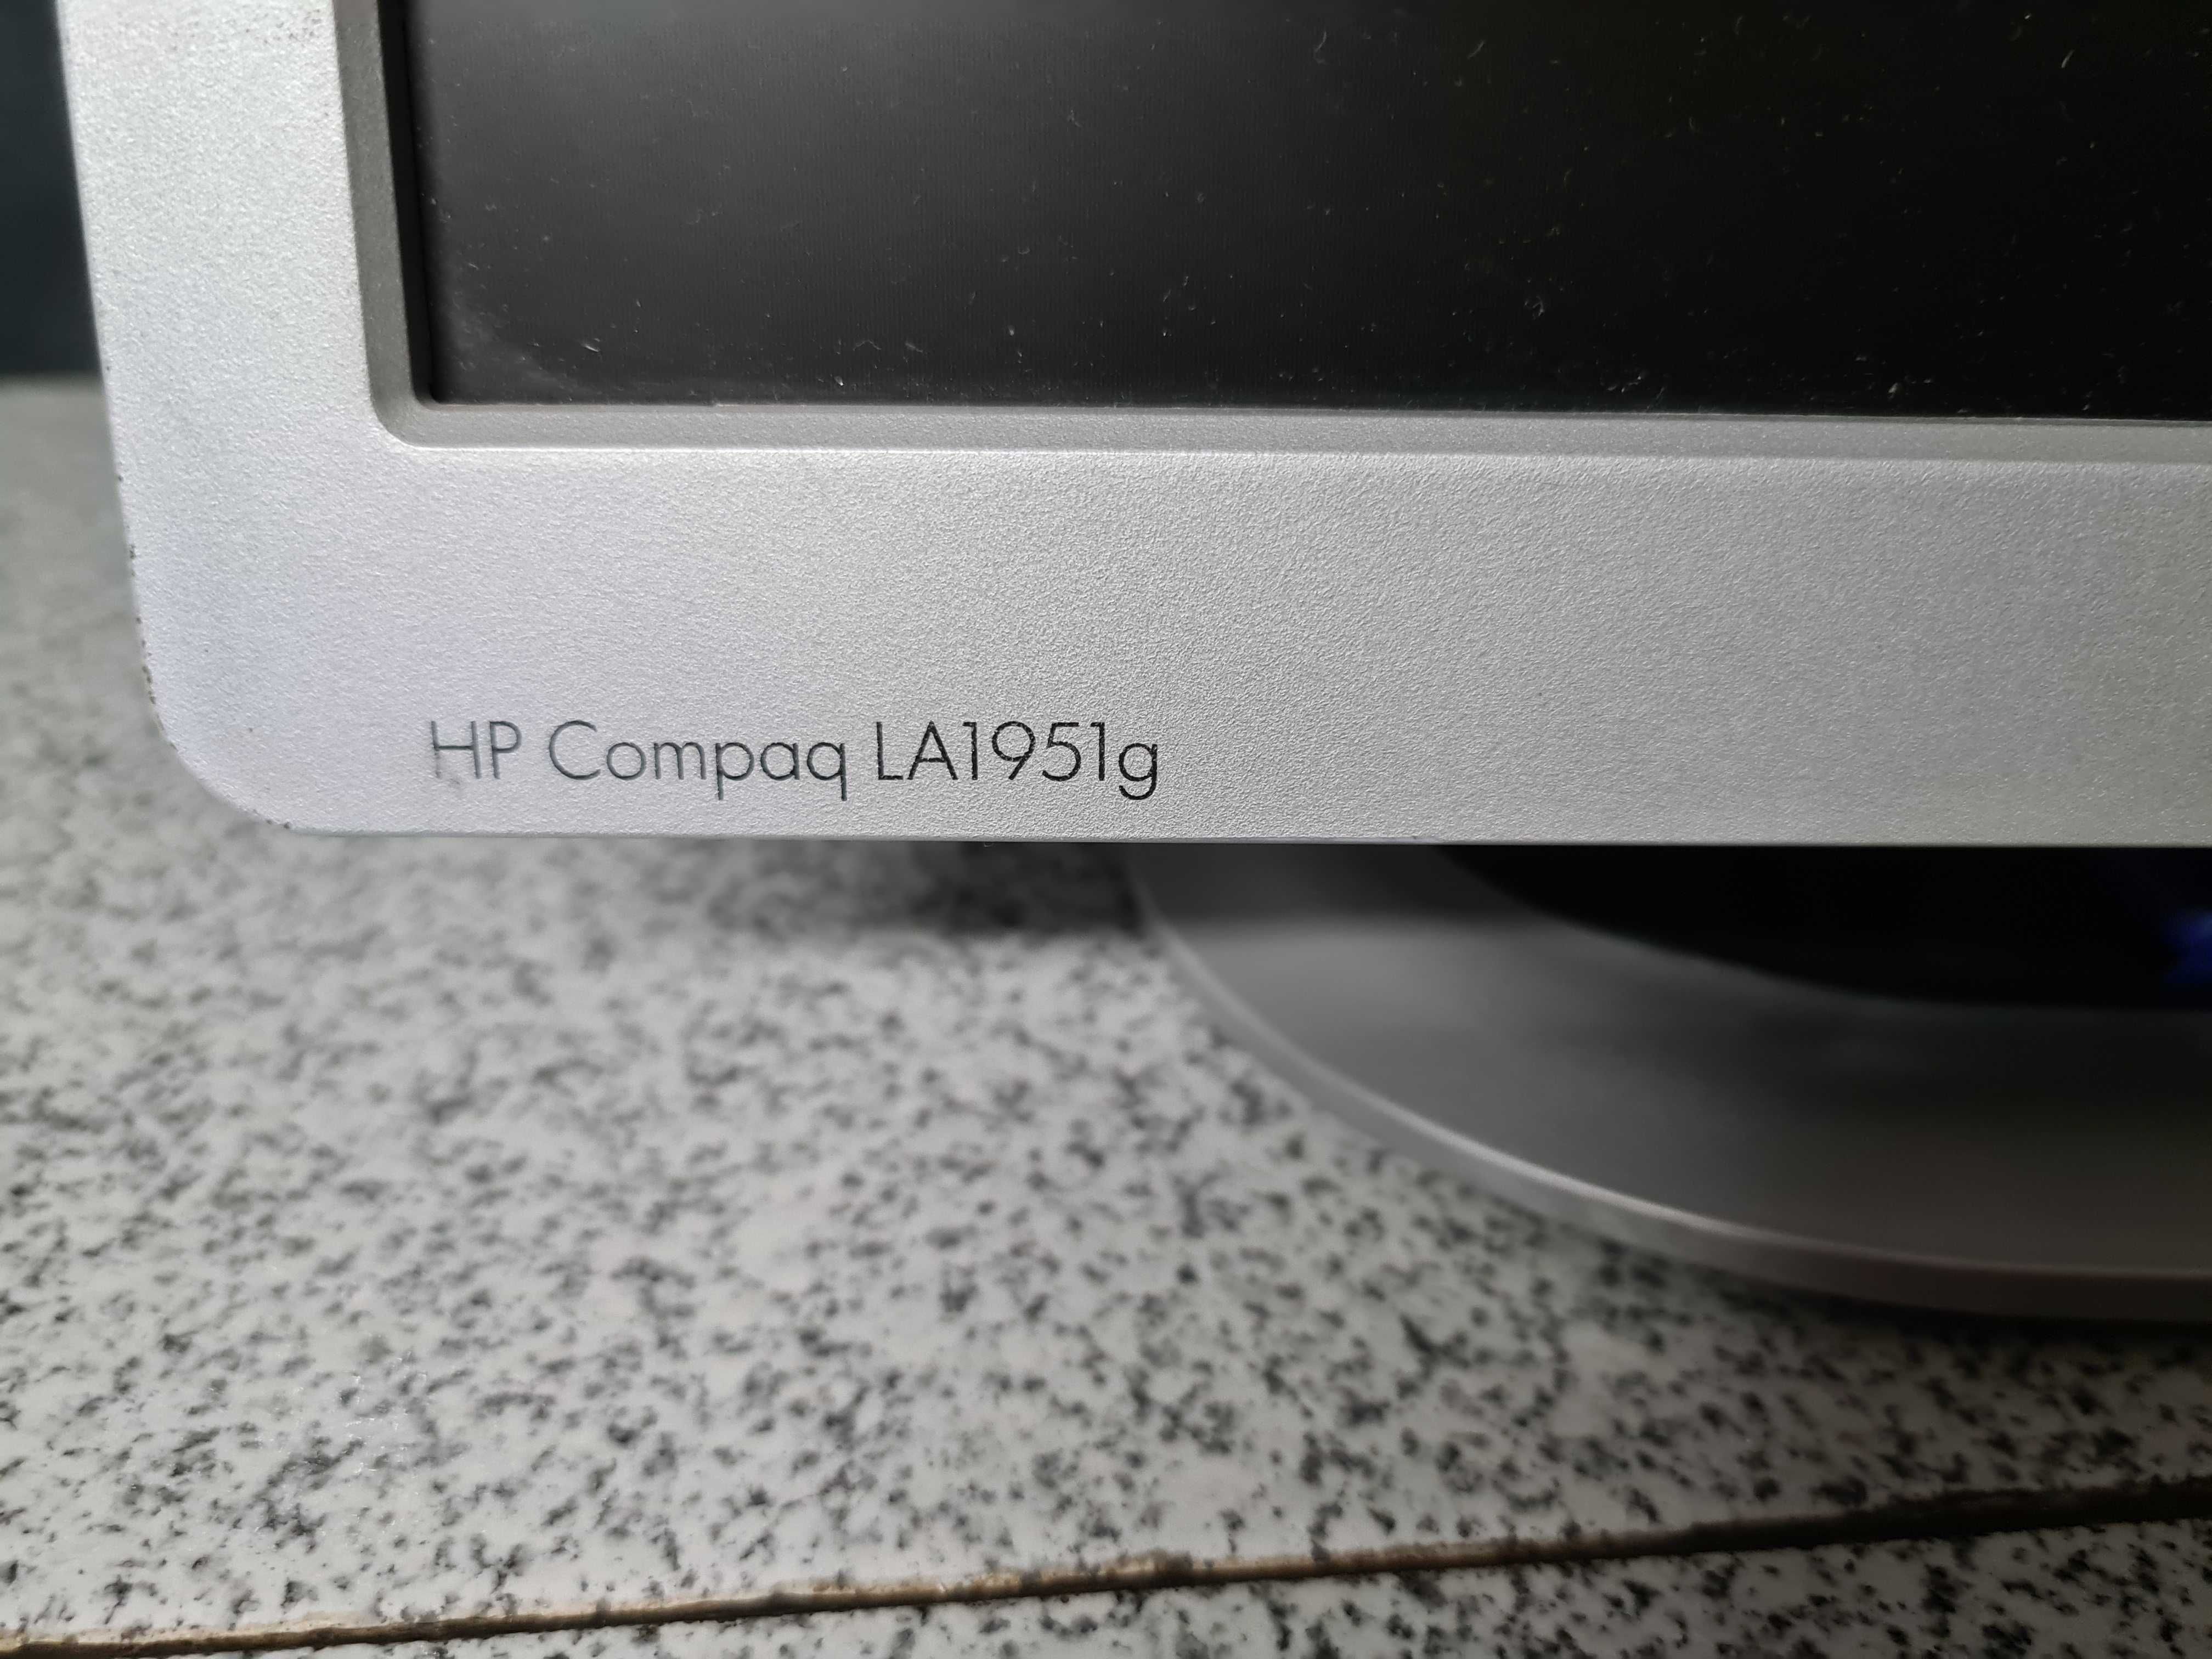 Monitor HP Compaq LA1951g + cabos